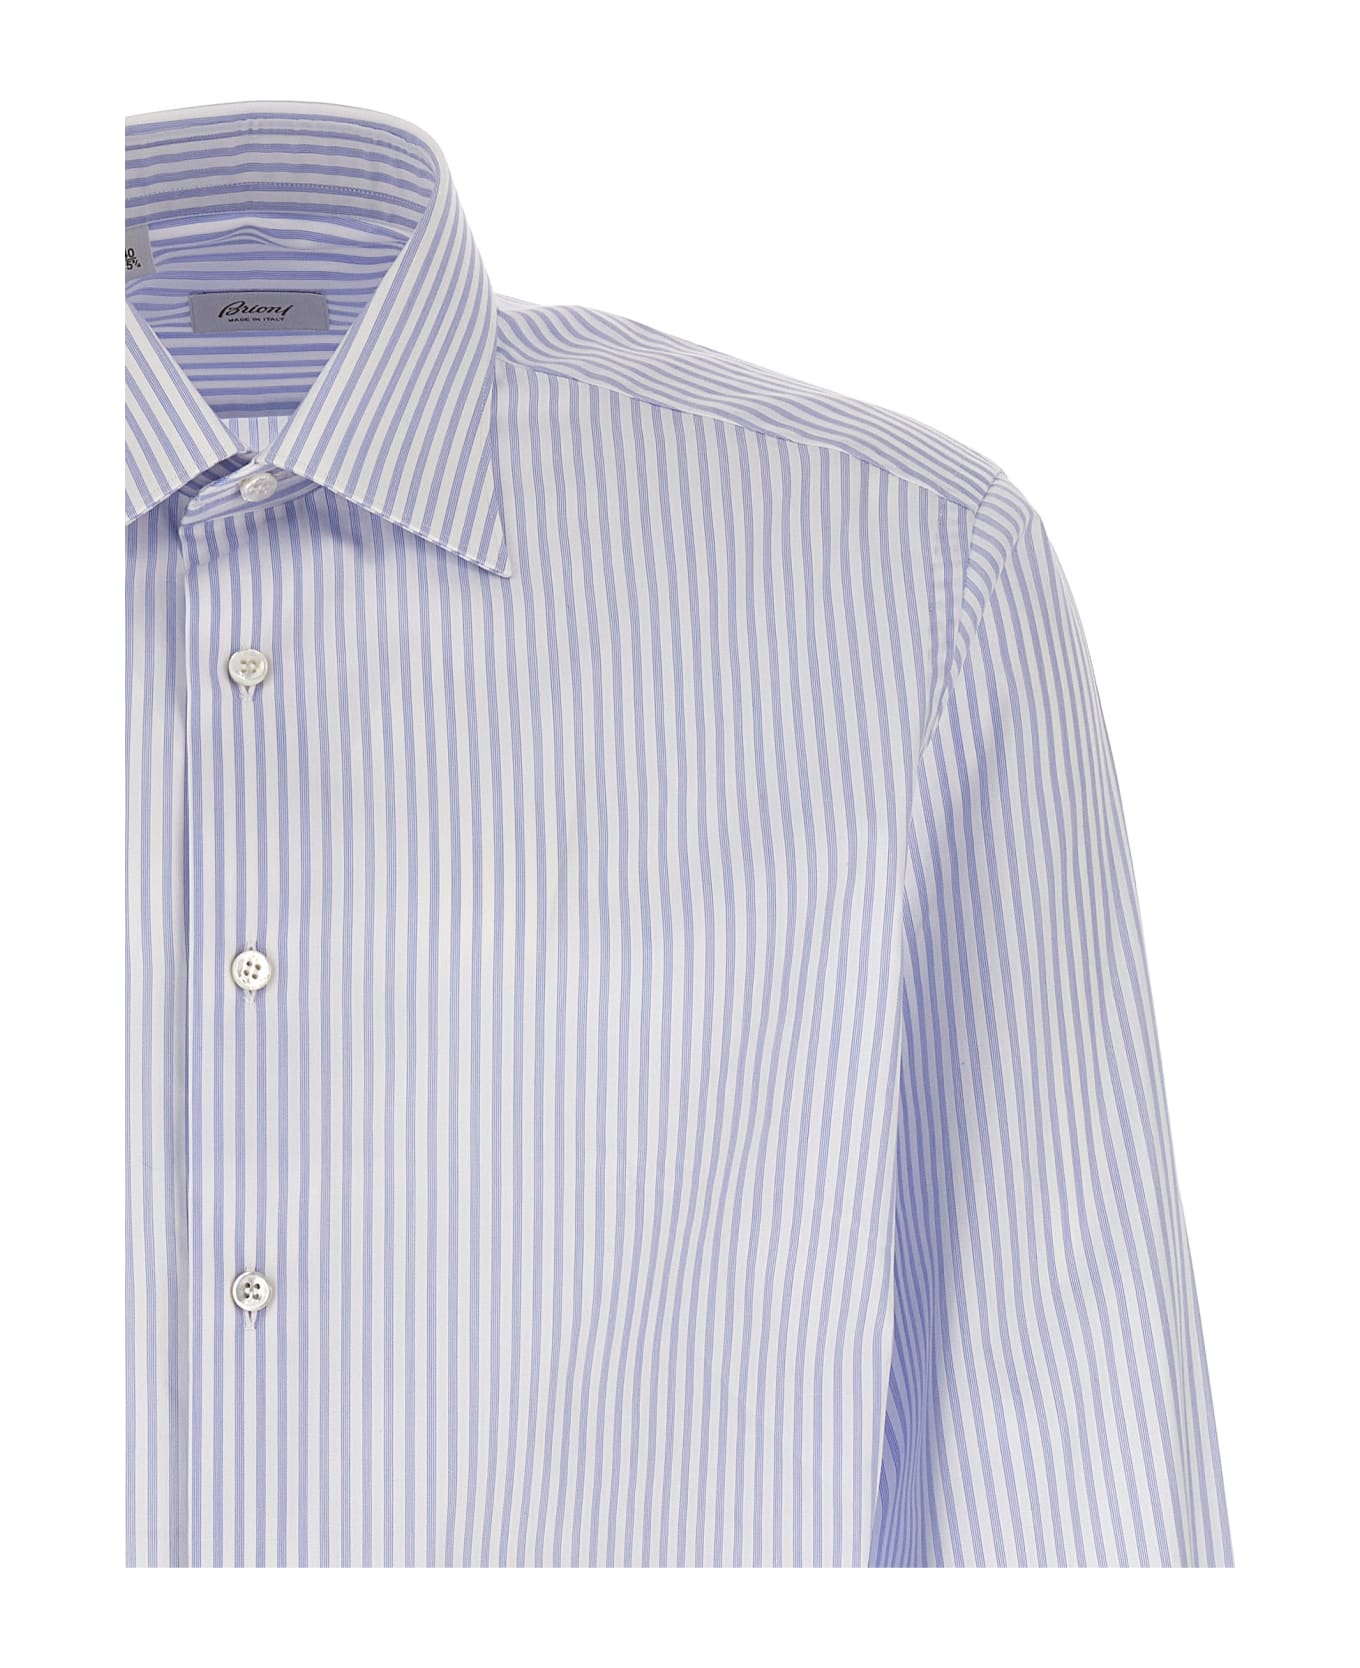 Brioni Striped Shirt - Light Blue